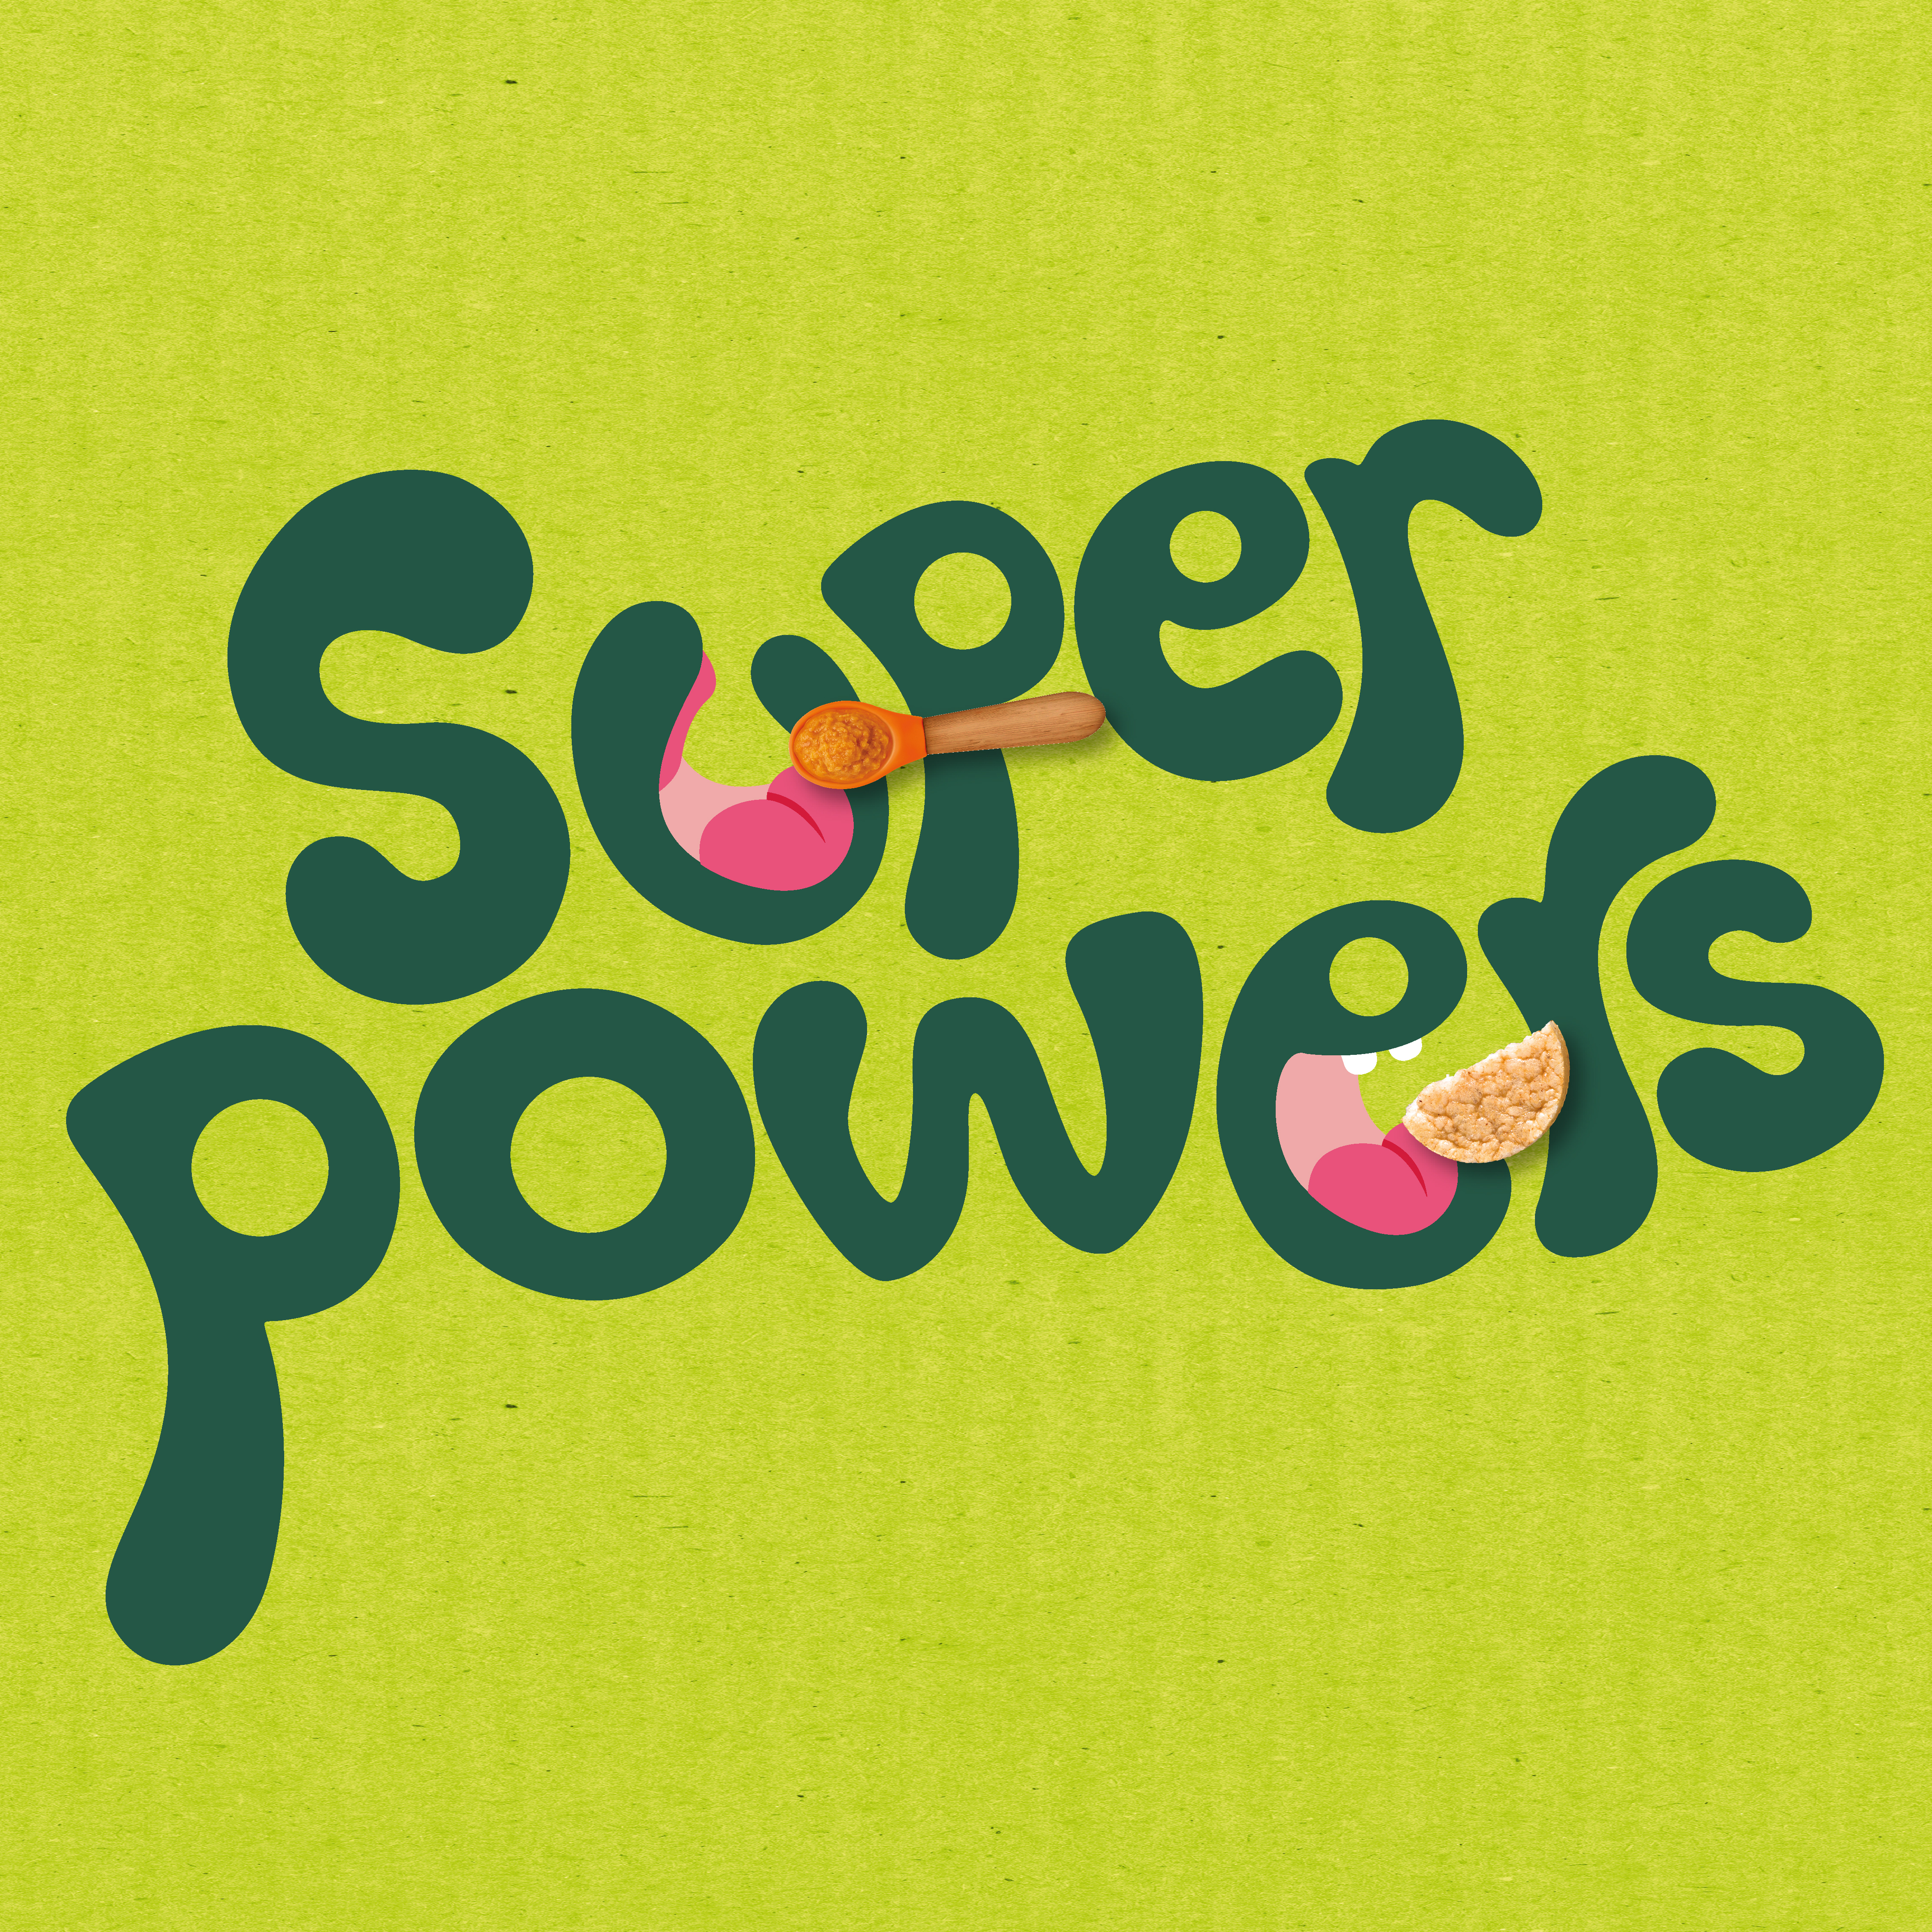 Super powers!